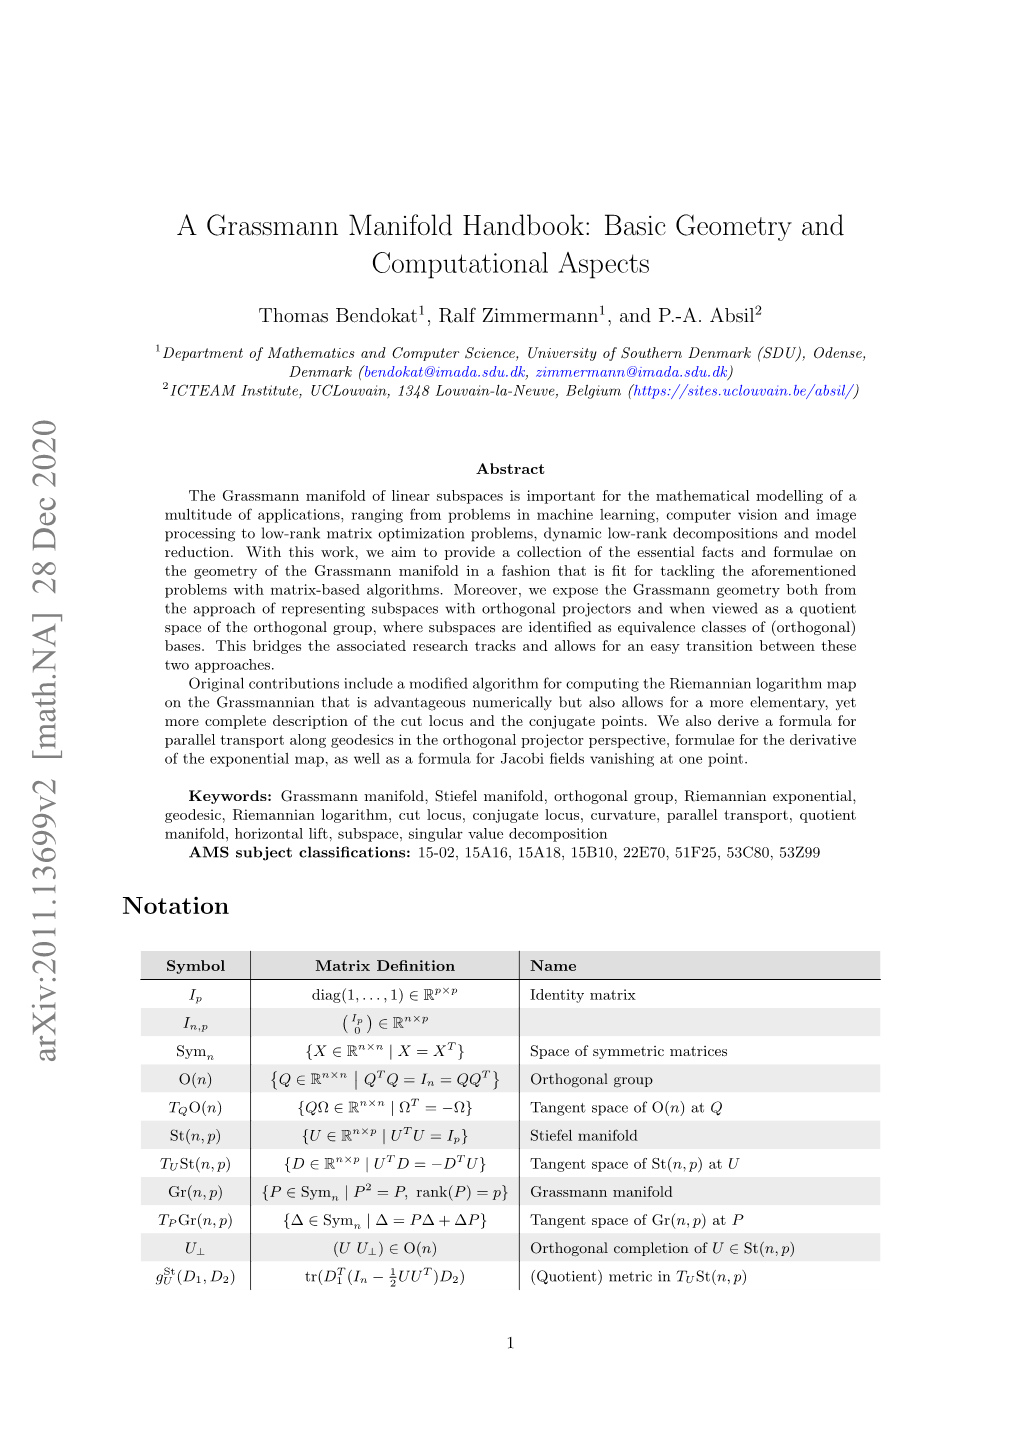 A Grassmann Manifold Handbook: Basic Geometry and Computational Aspects